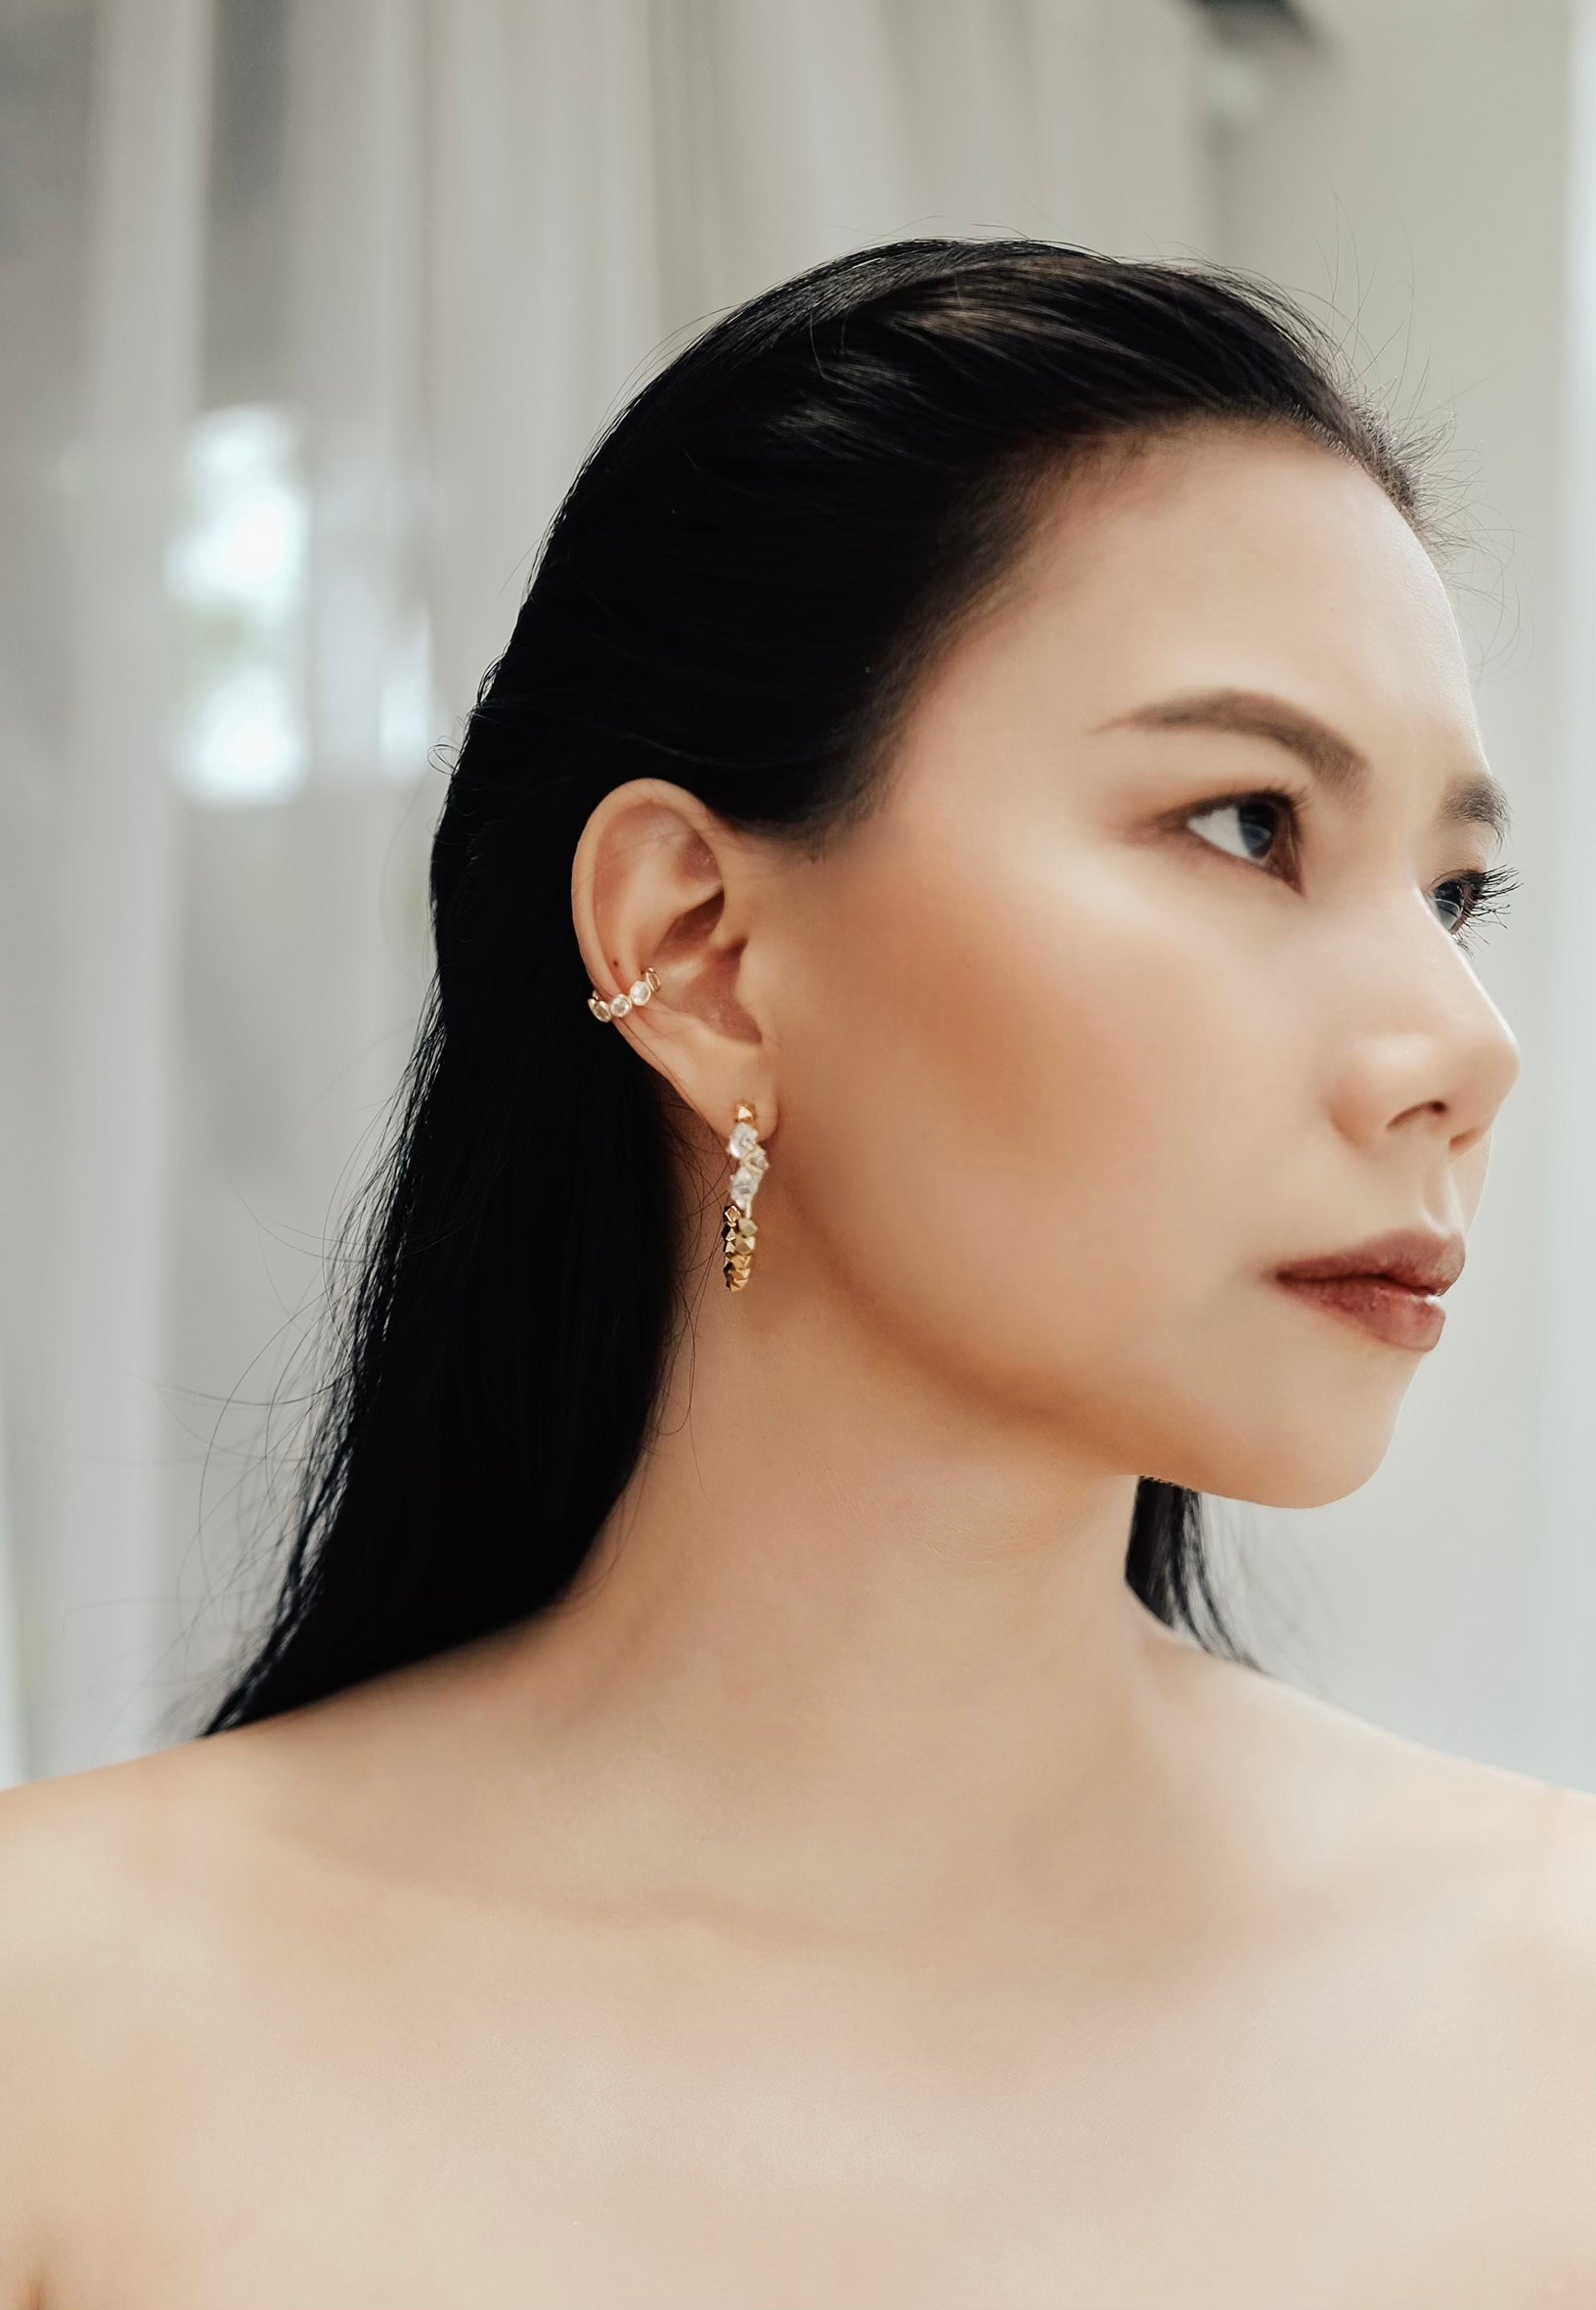 Moonlit earrings